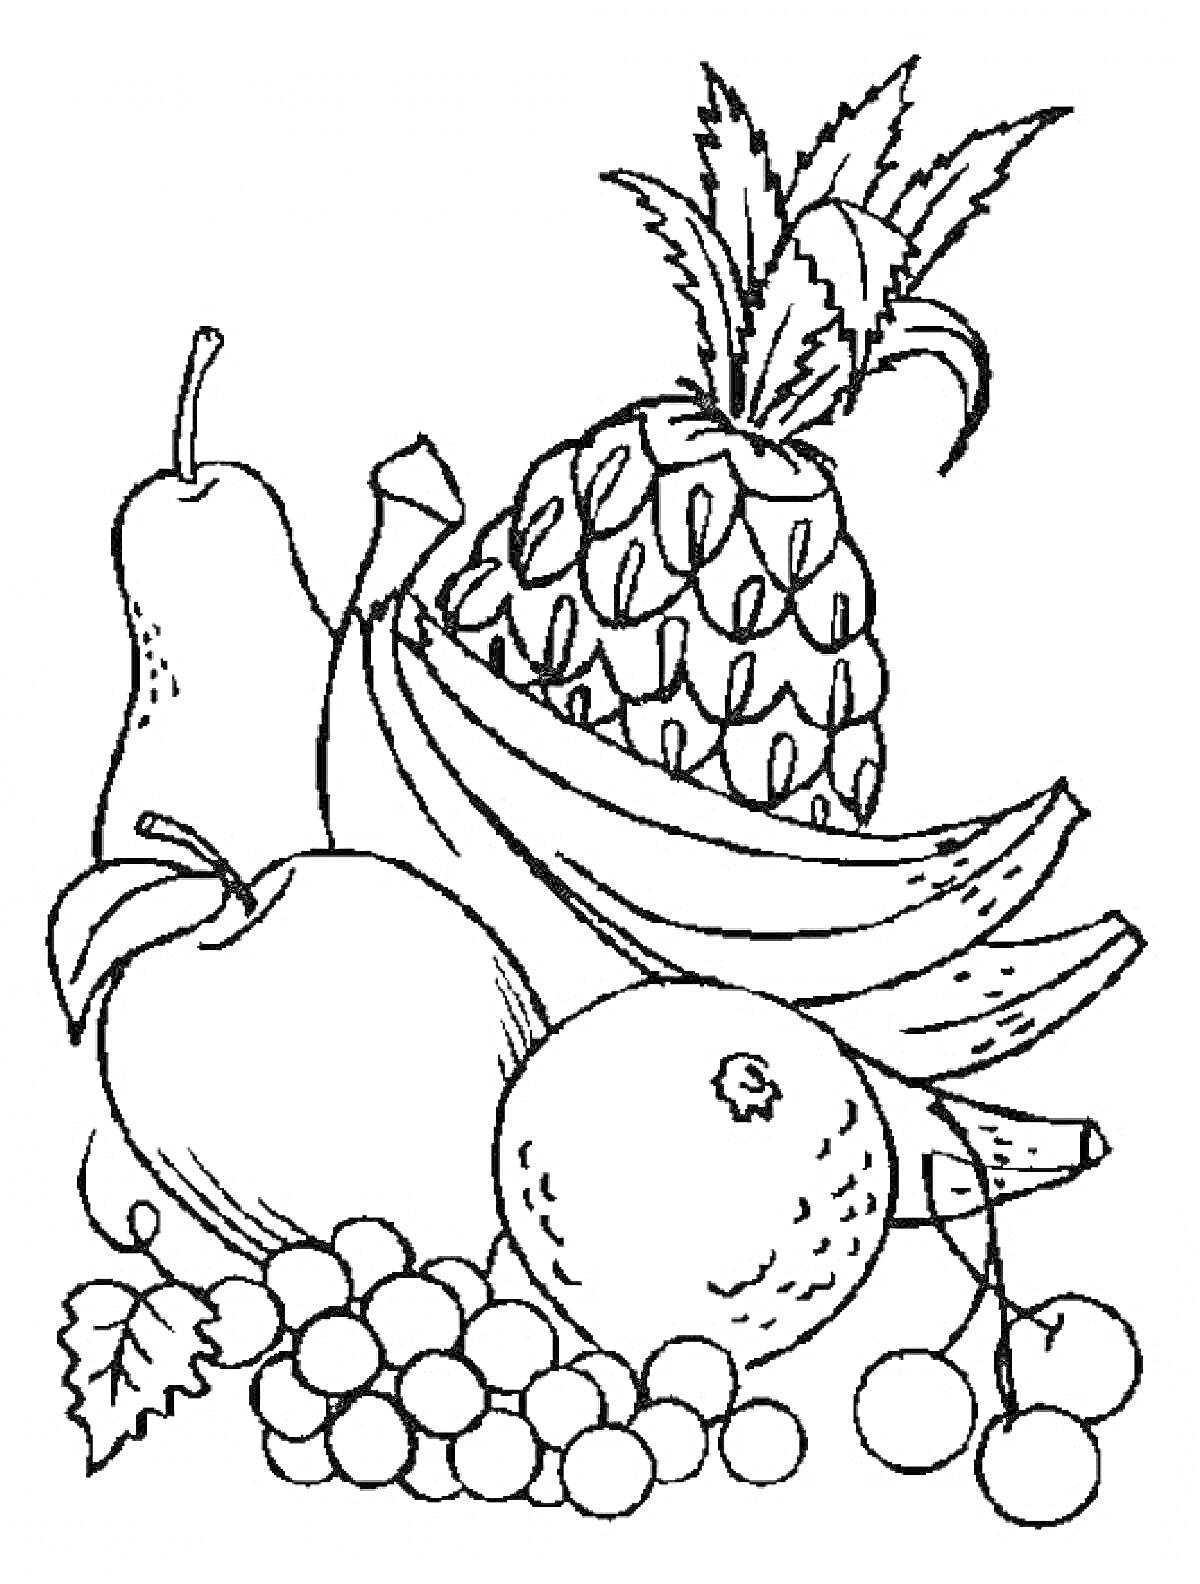 Раскраска ананас, бананы, груша, яблоко, апельсин, виноград, вишня